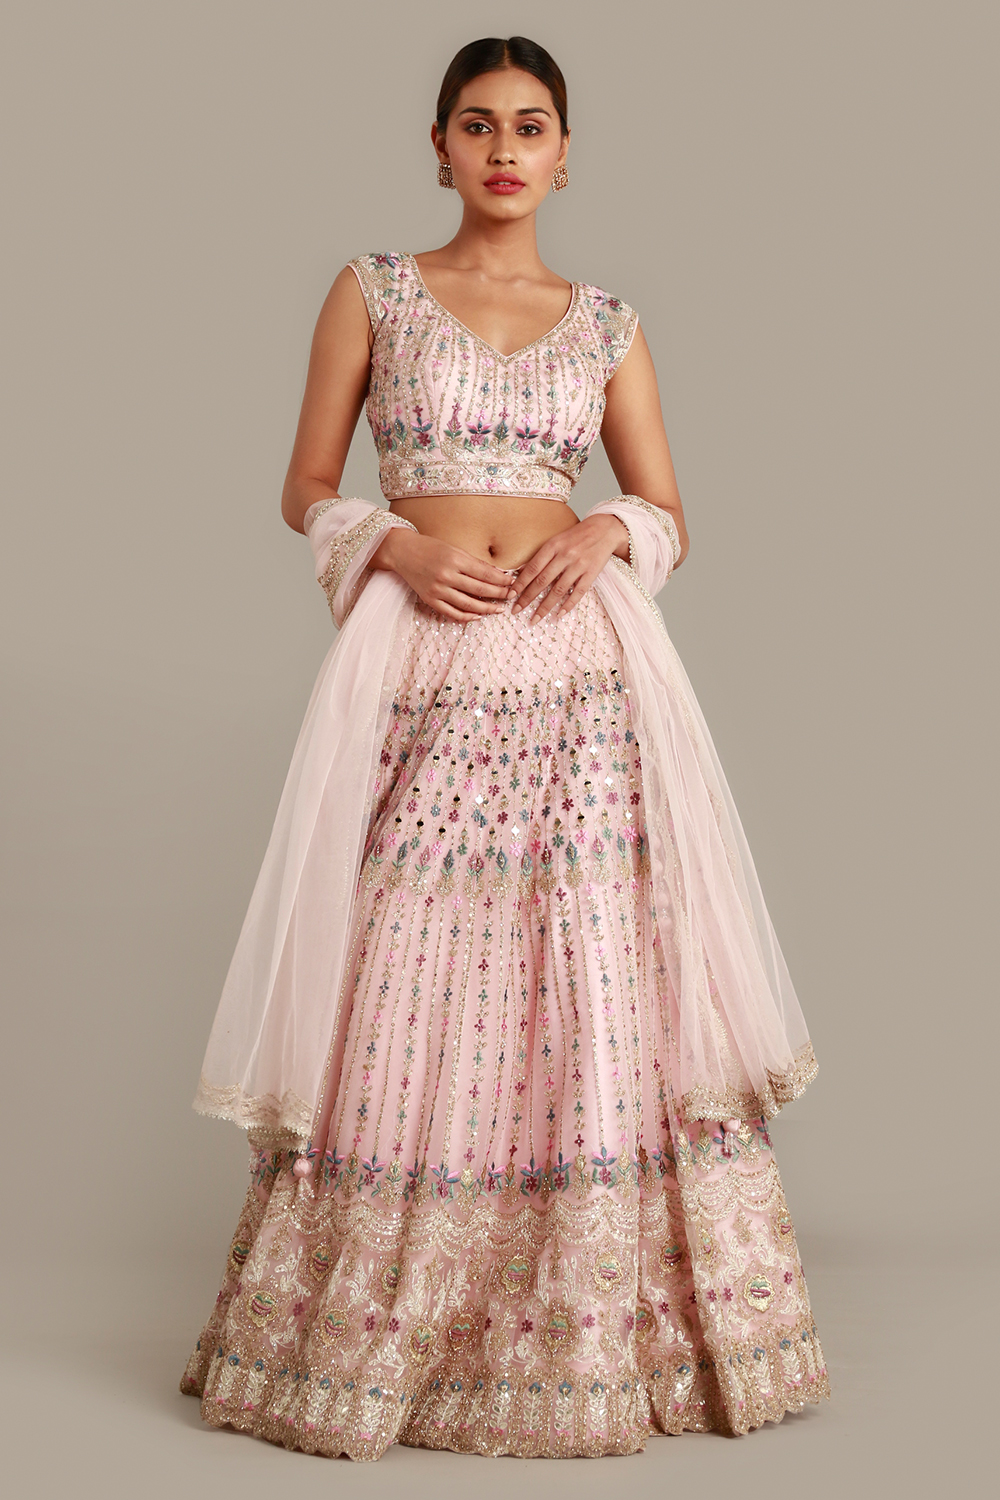 Mirnalini looking pretty in pink lehenga for pongal festivel! |  Fashionworldhub